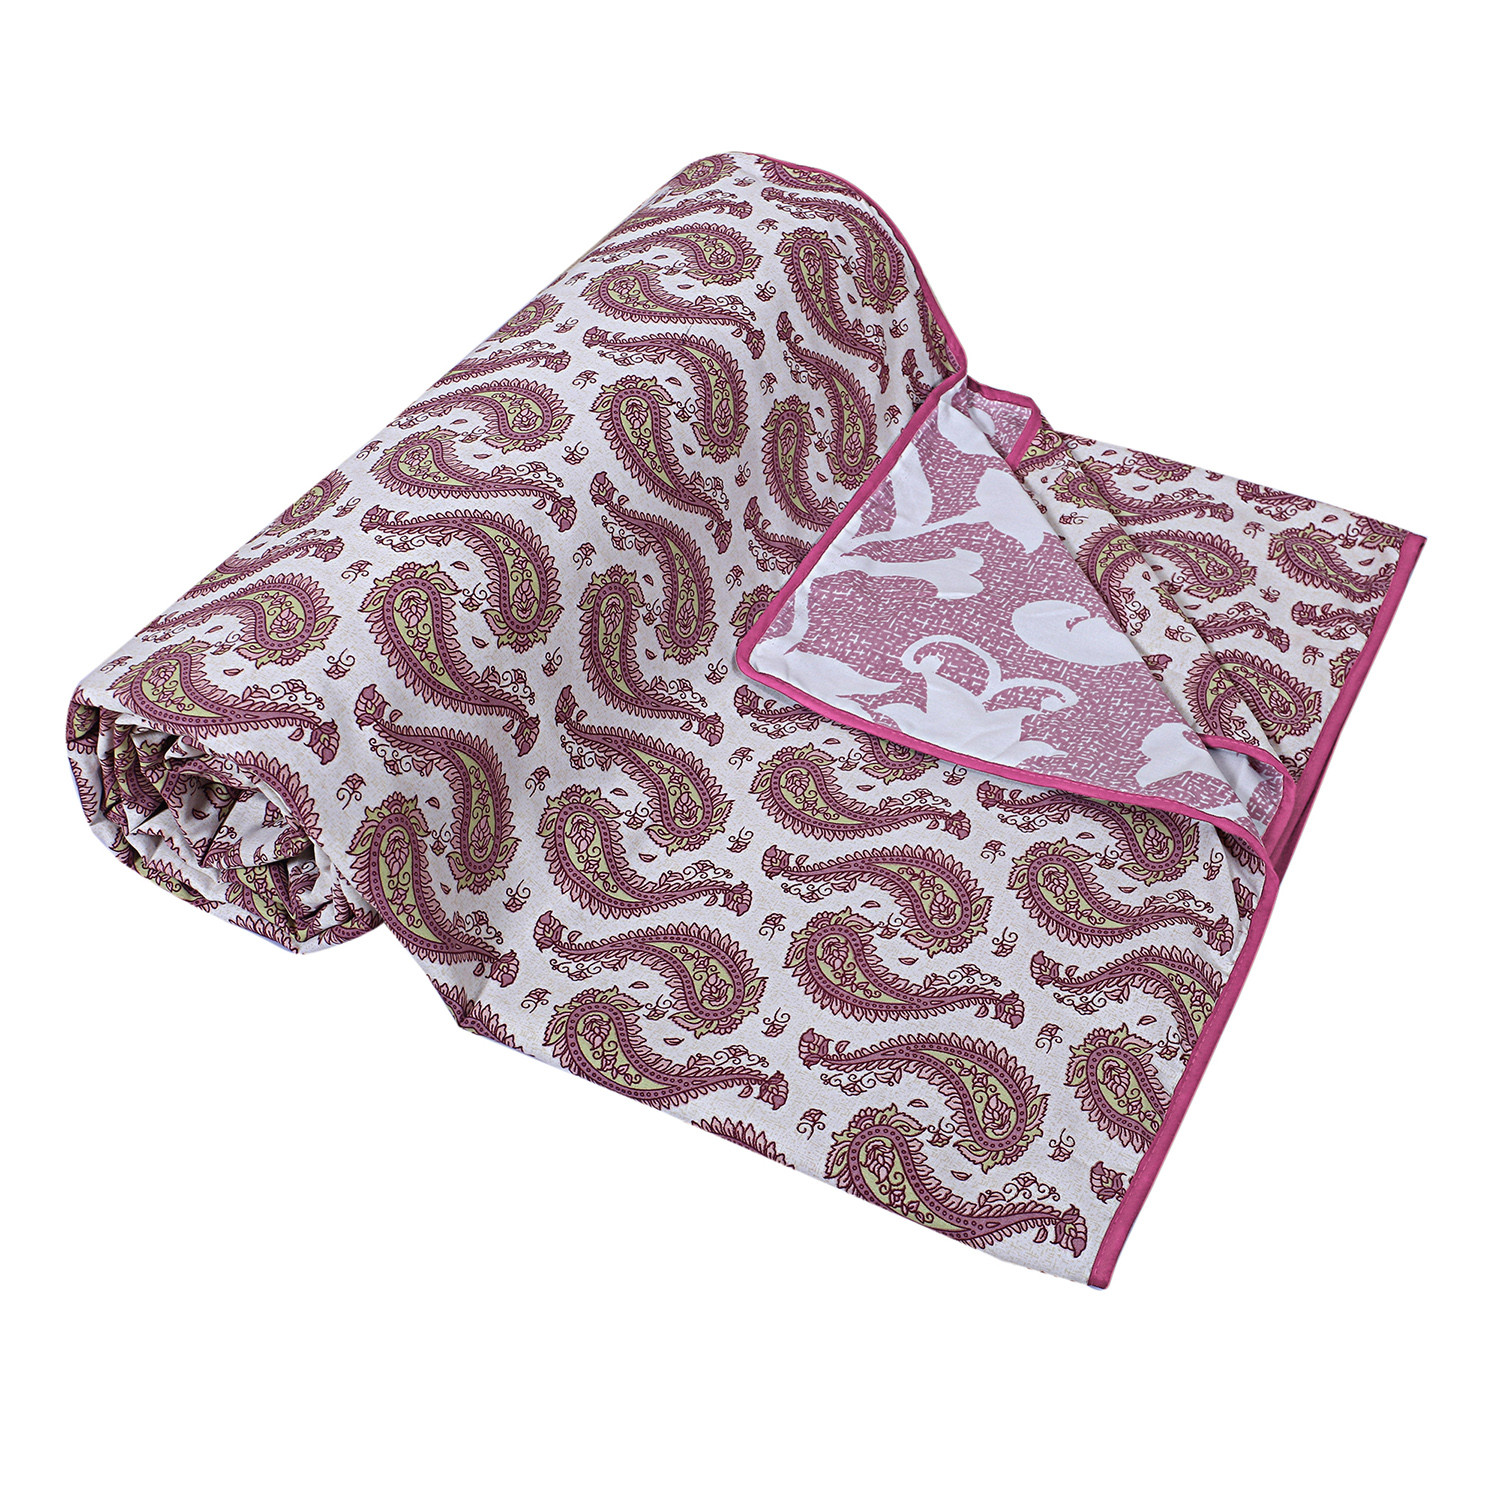 Kuber Industries Cotton Soft Lightweight Carry Design Reversible Single Bed Dohar | Blanket | AC Quilt for Home & Travel (Pink)